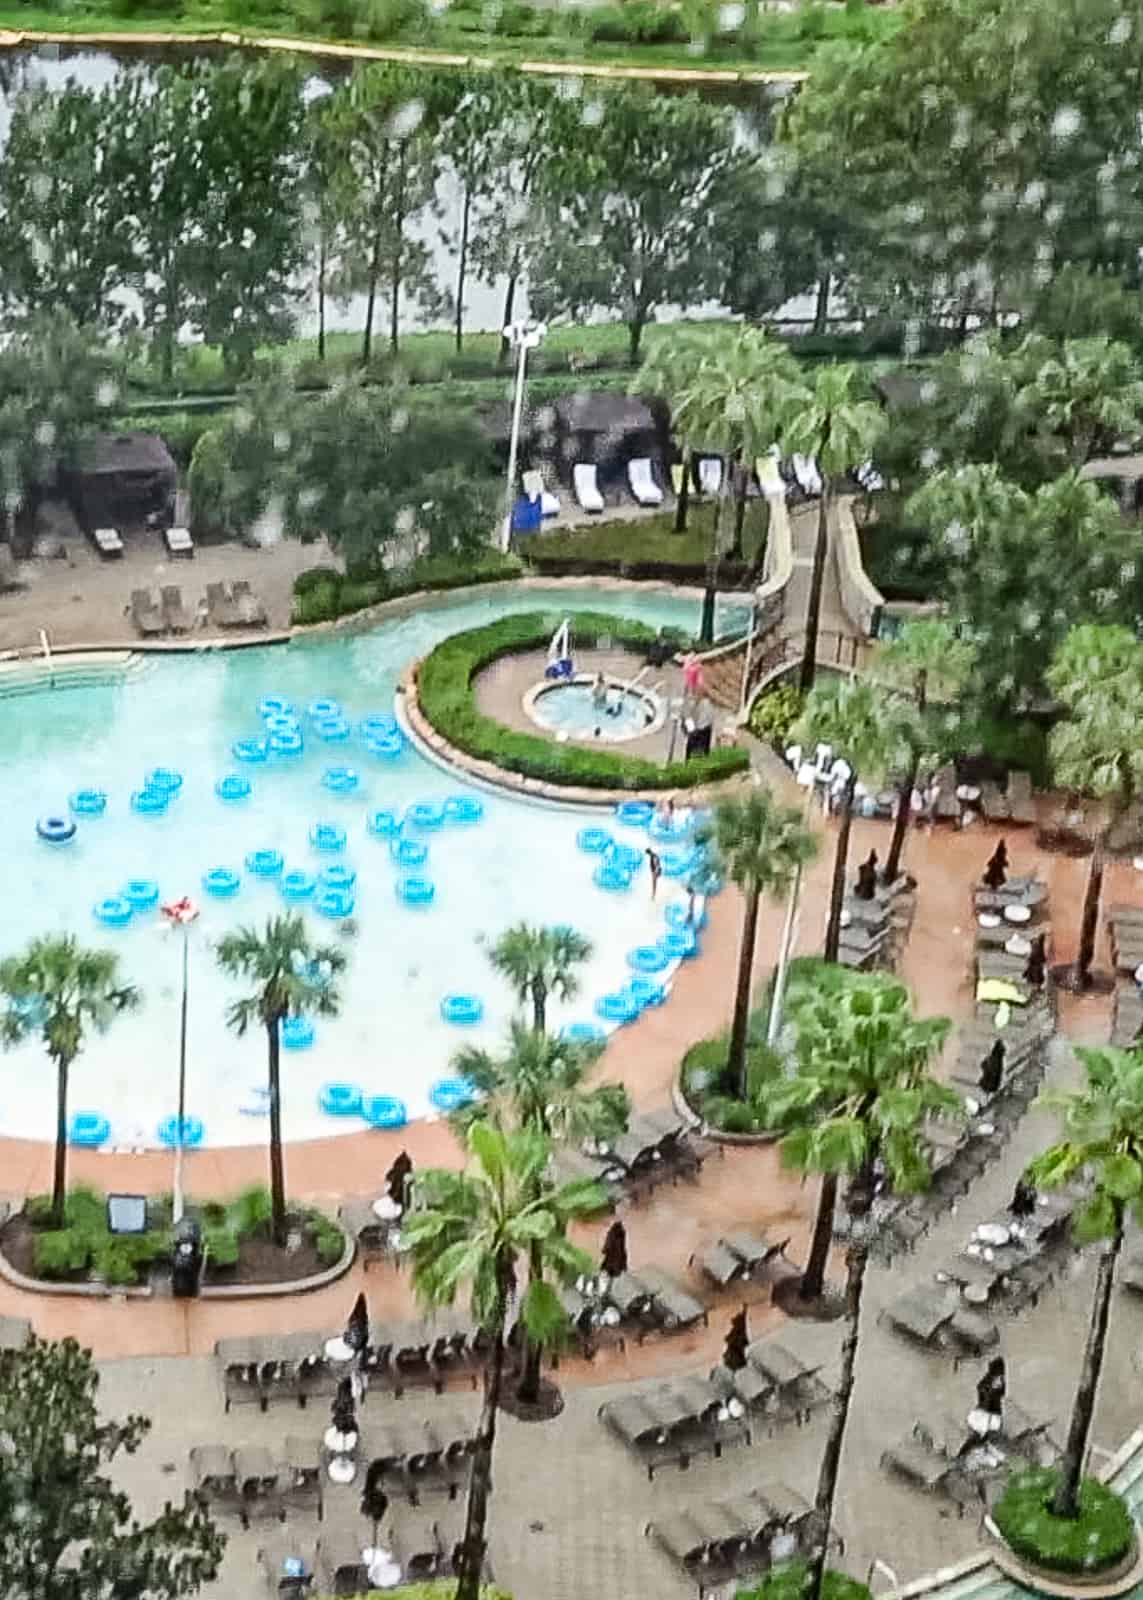 Lazy river pool at Signia Bonnet Creek Hilton resort offsite Disney World